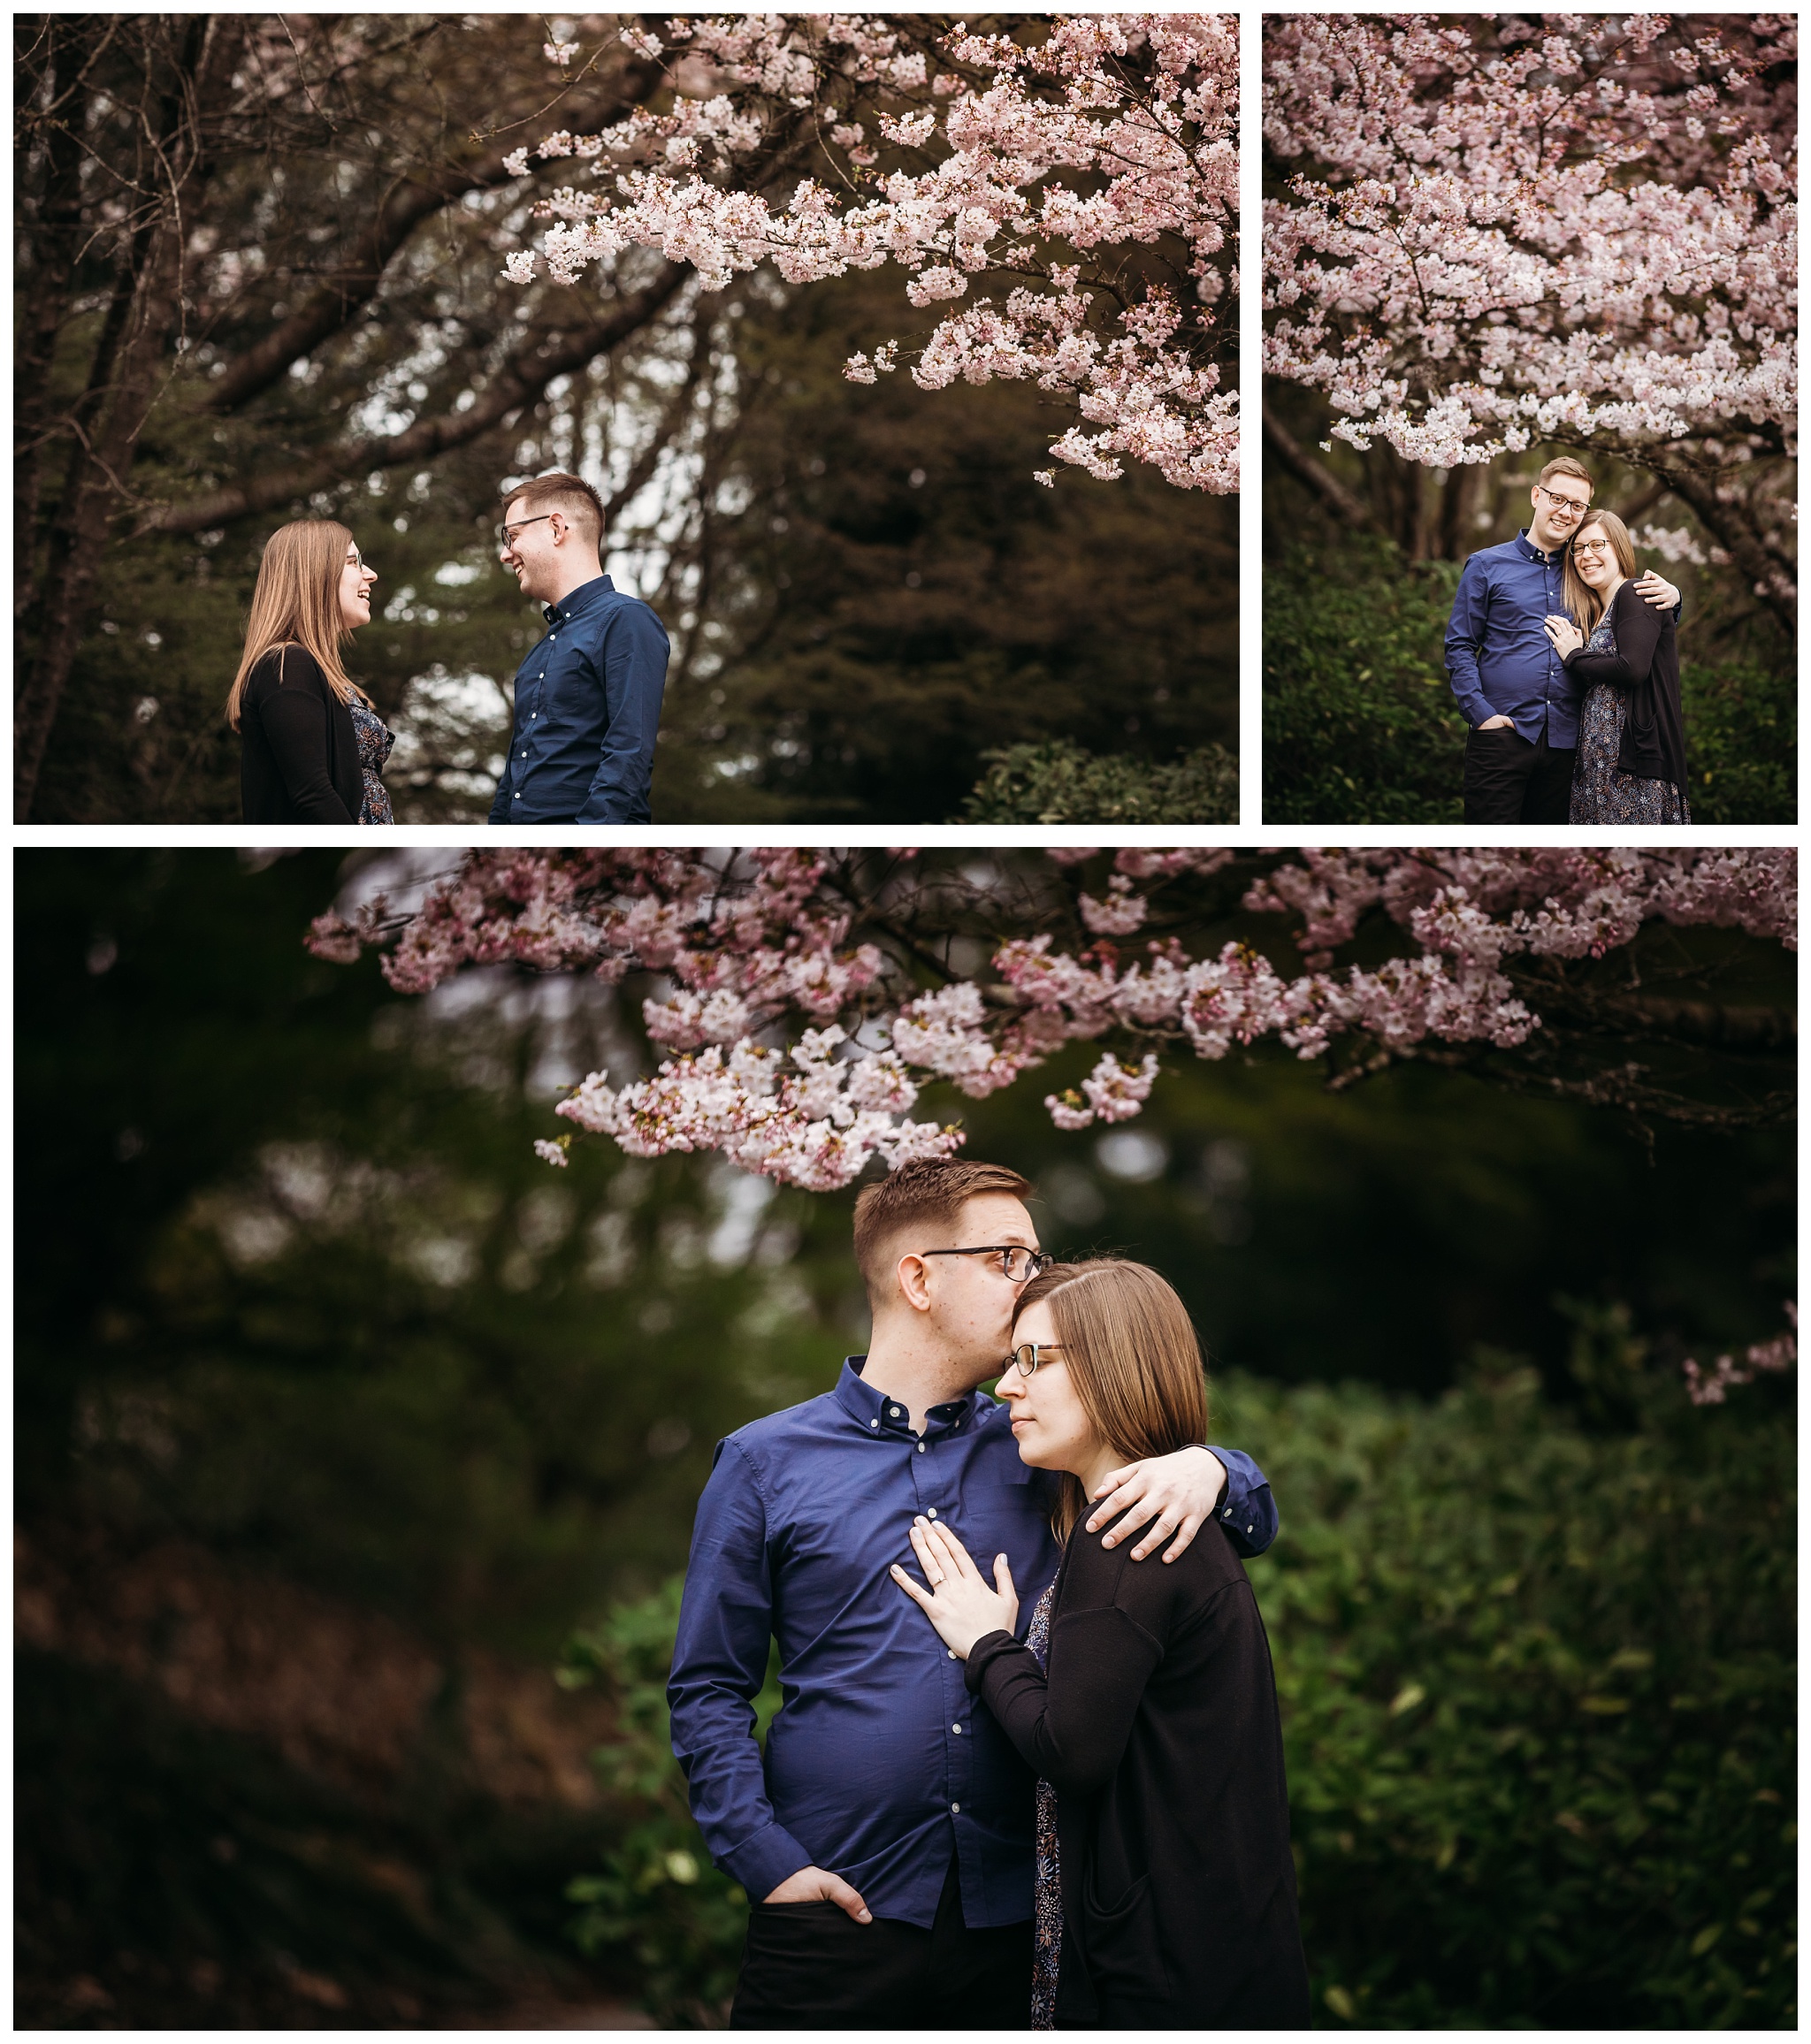 Queen Elizabeth Park Spring Engagement Photography Cherry Blossom Photos Couple Romantic_0001.jpg